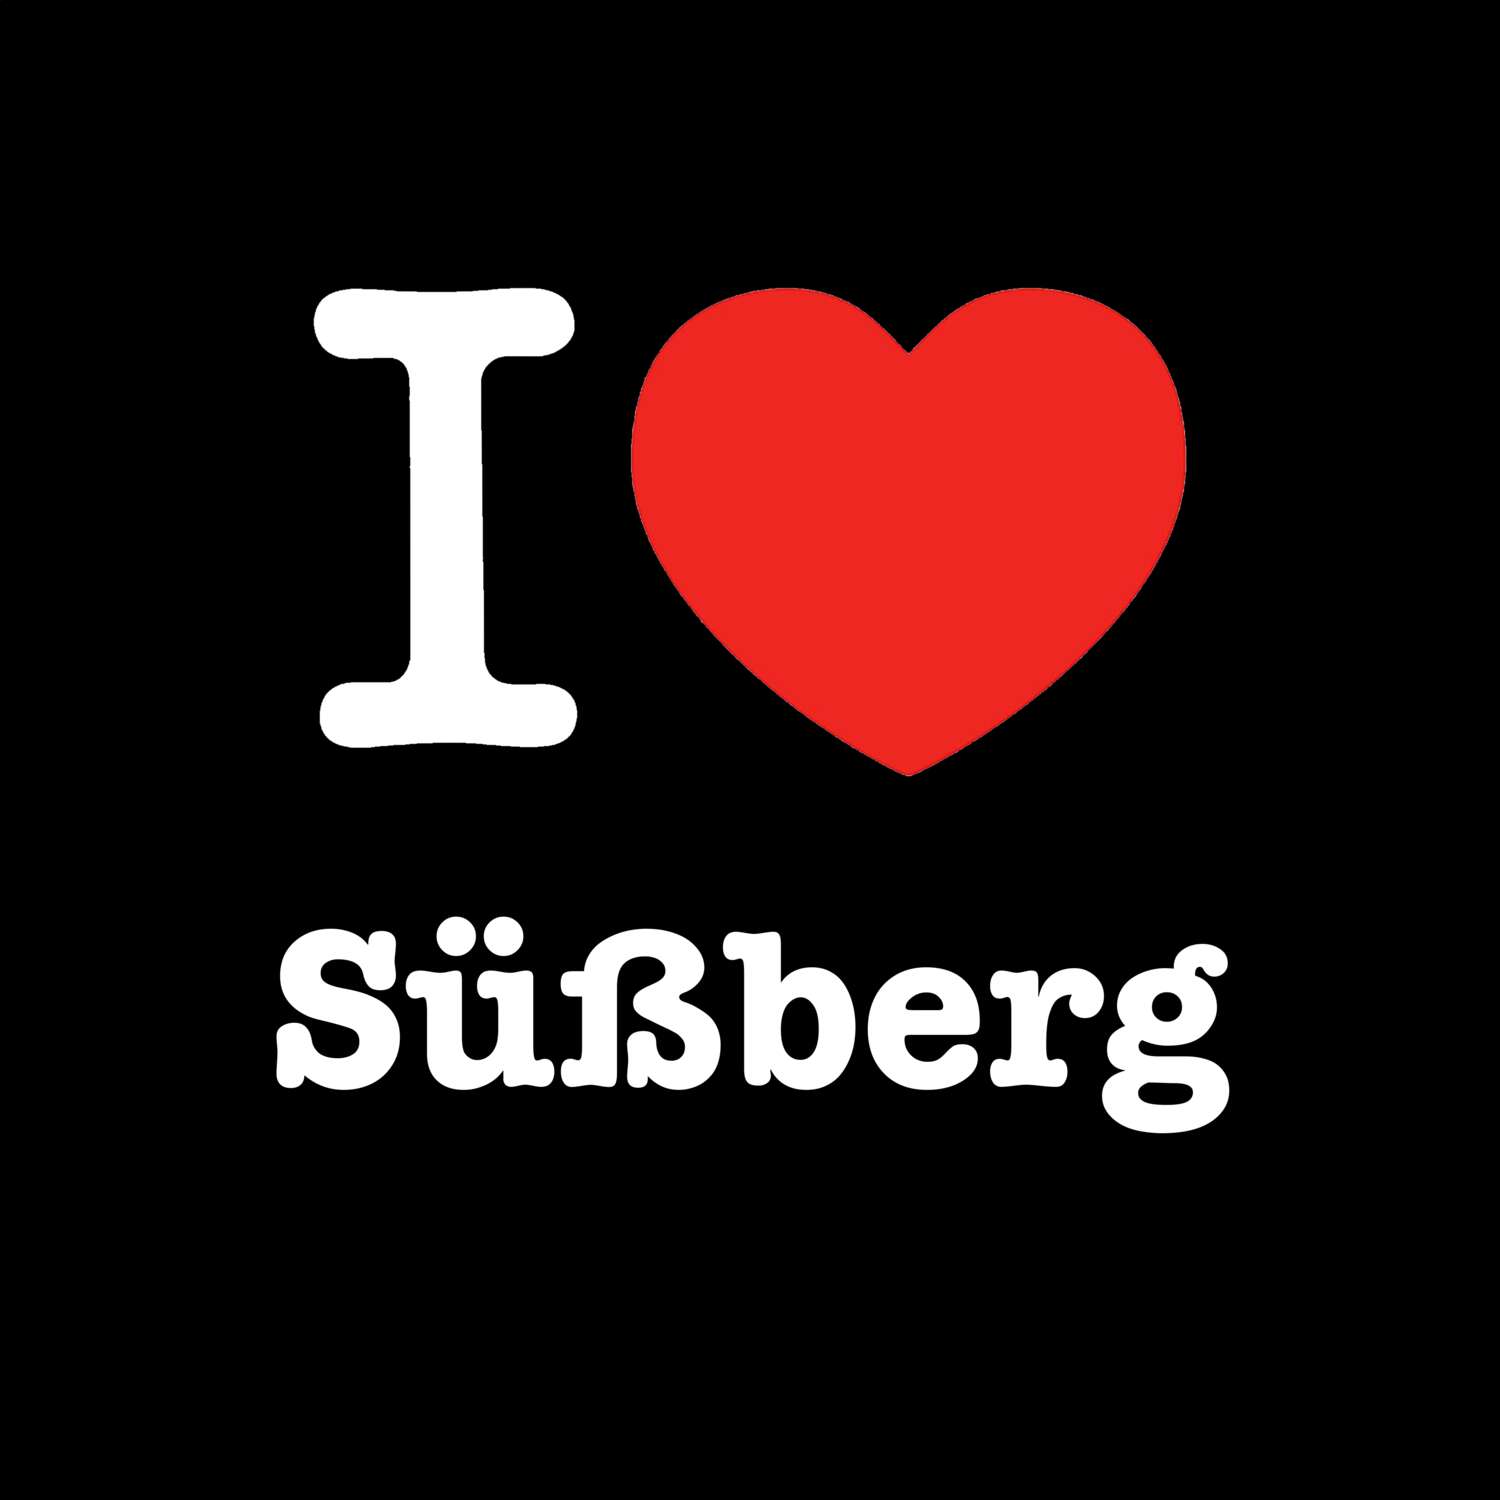 Süßberg T-Shirt »I love«